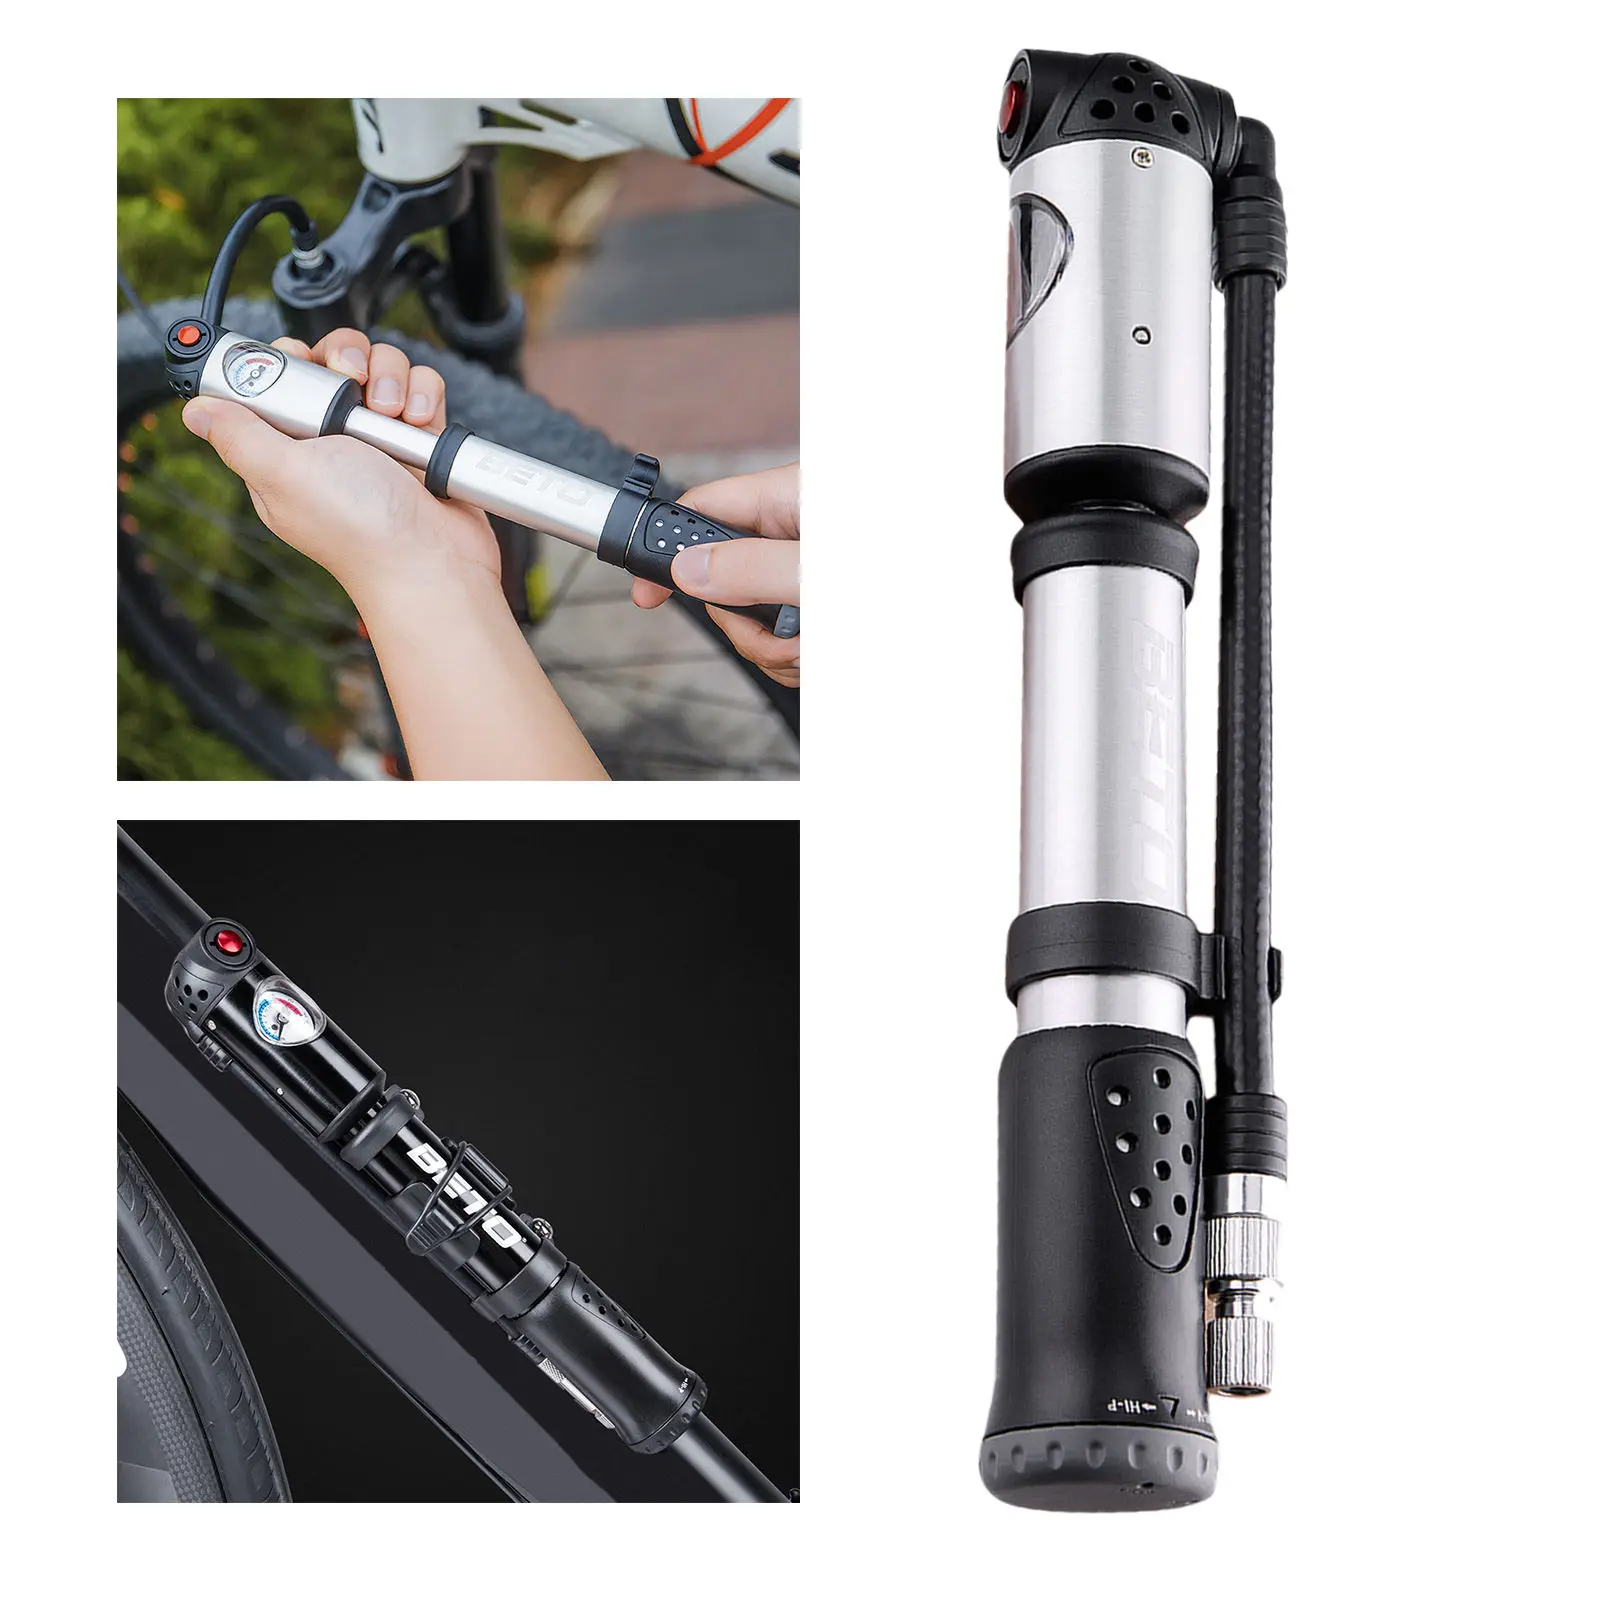 Mini Bike Pump - Presta & Schrader Bicycle Pump - 300 PSI Tire Pump for Road & MTB - No Valve Changing Needed